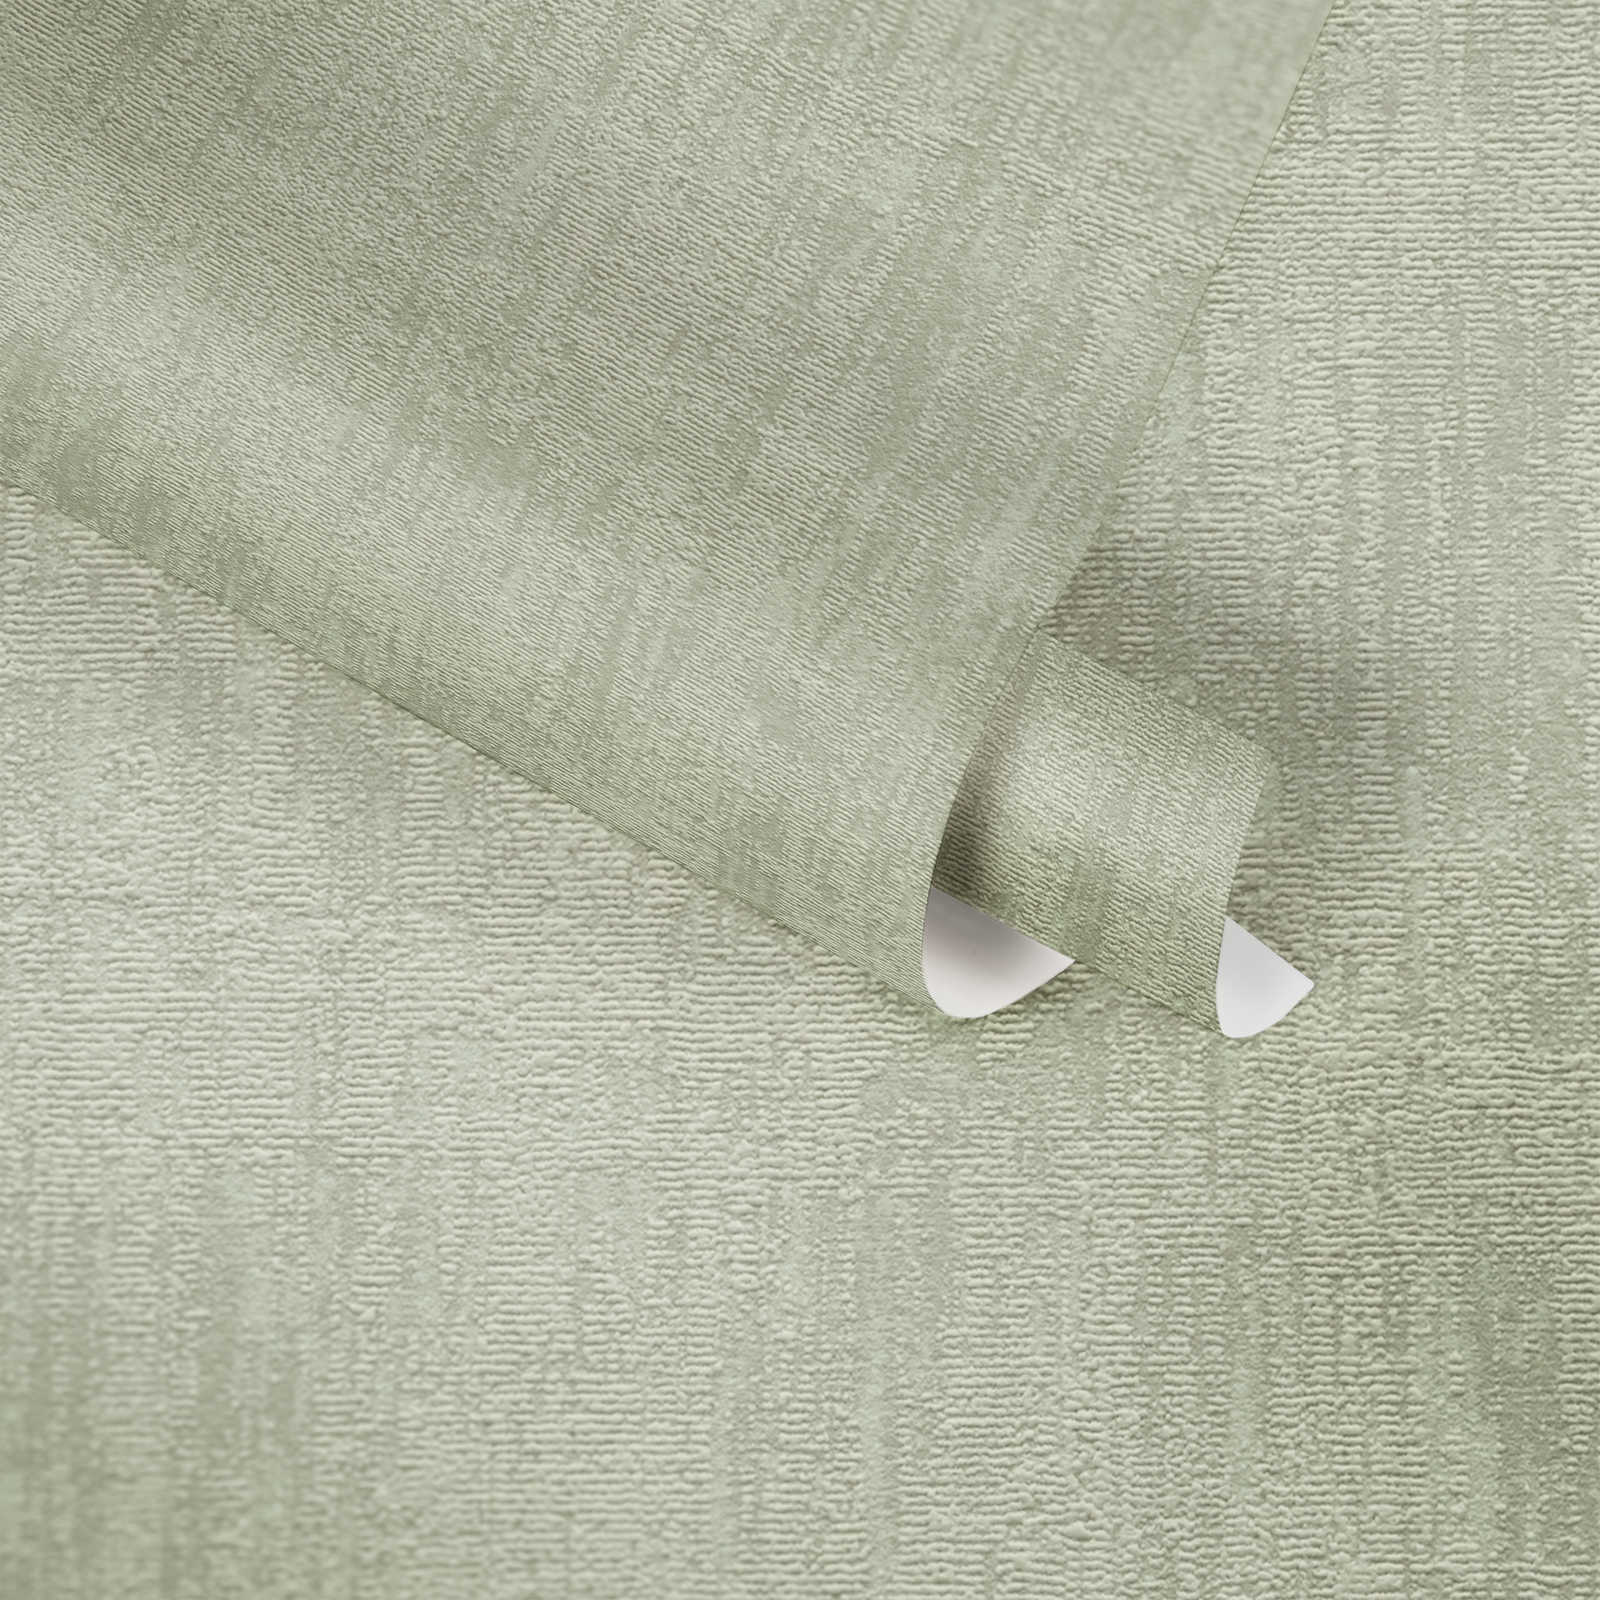             Abstract raffia pattern wallpaper - green
        